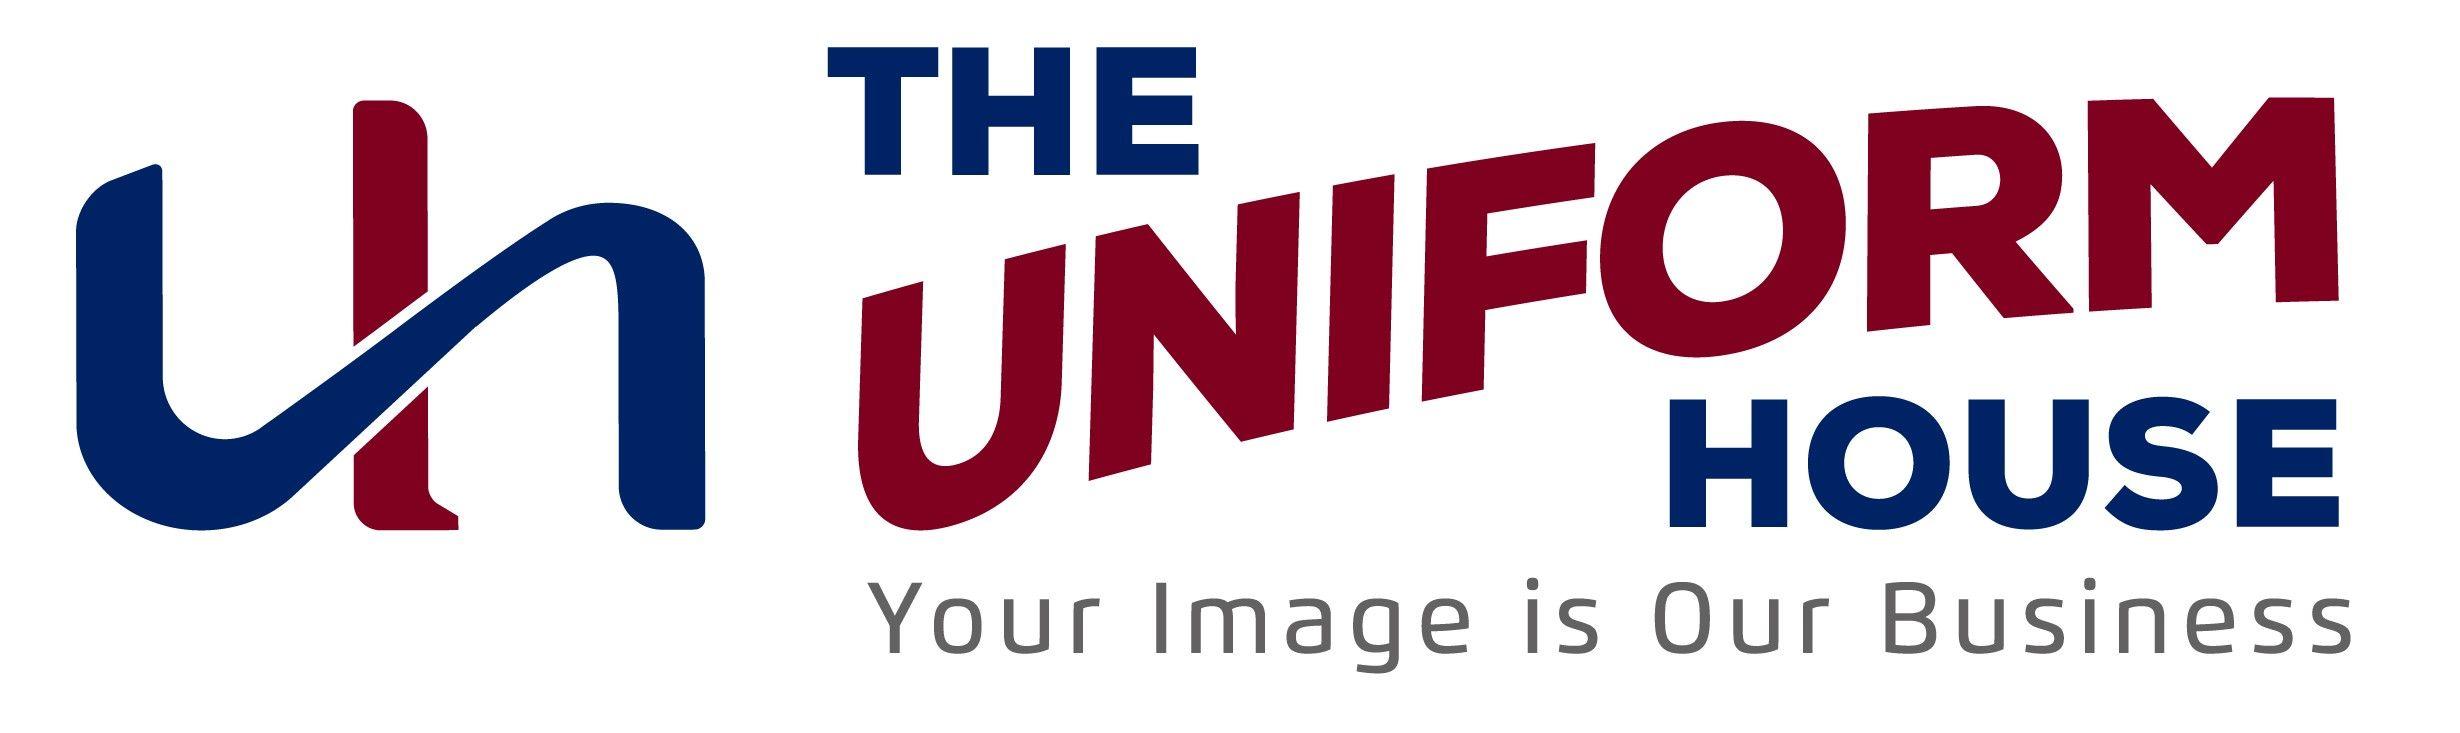 Uniform Logo - The Uniform House US IN